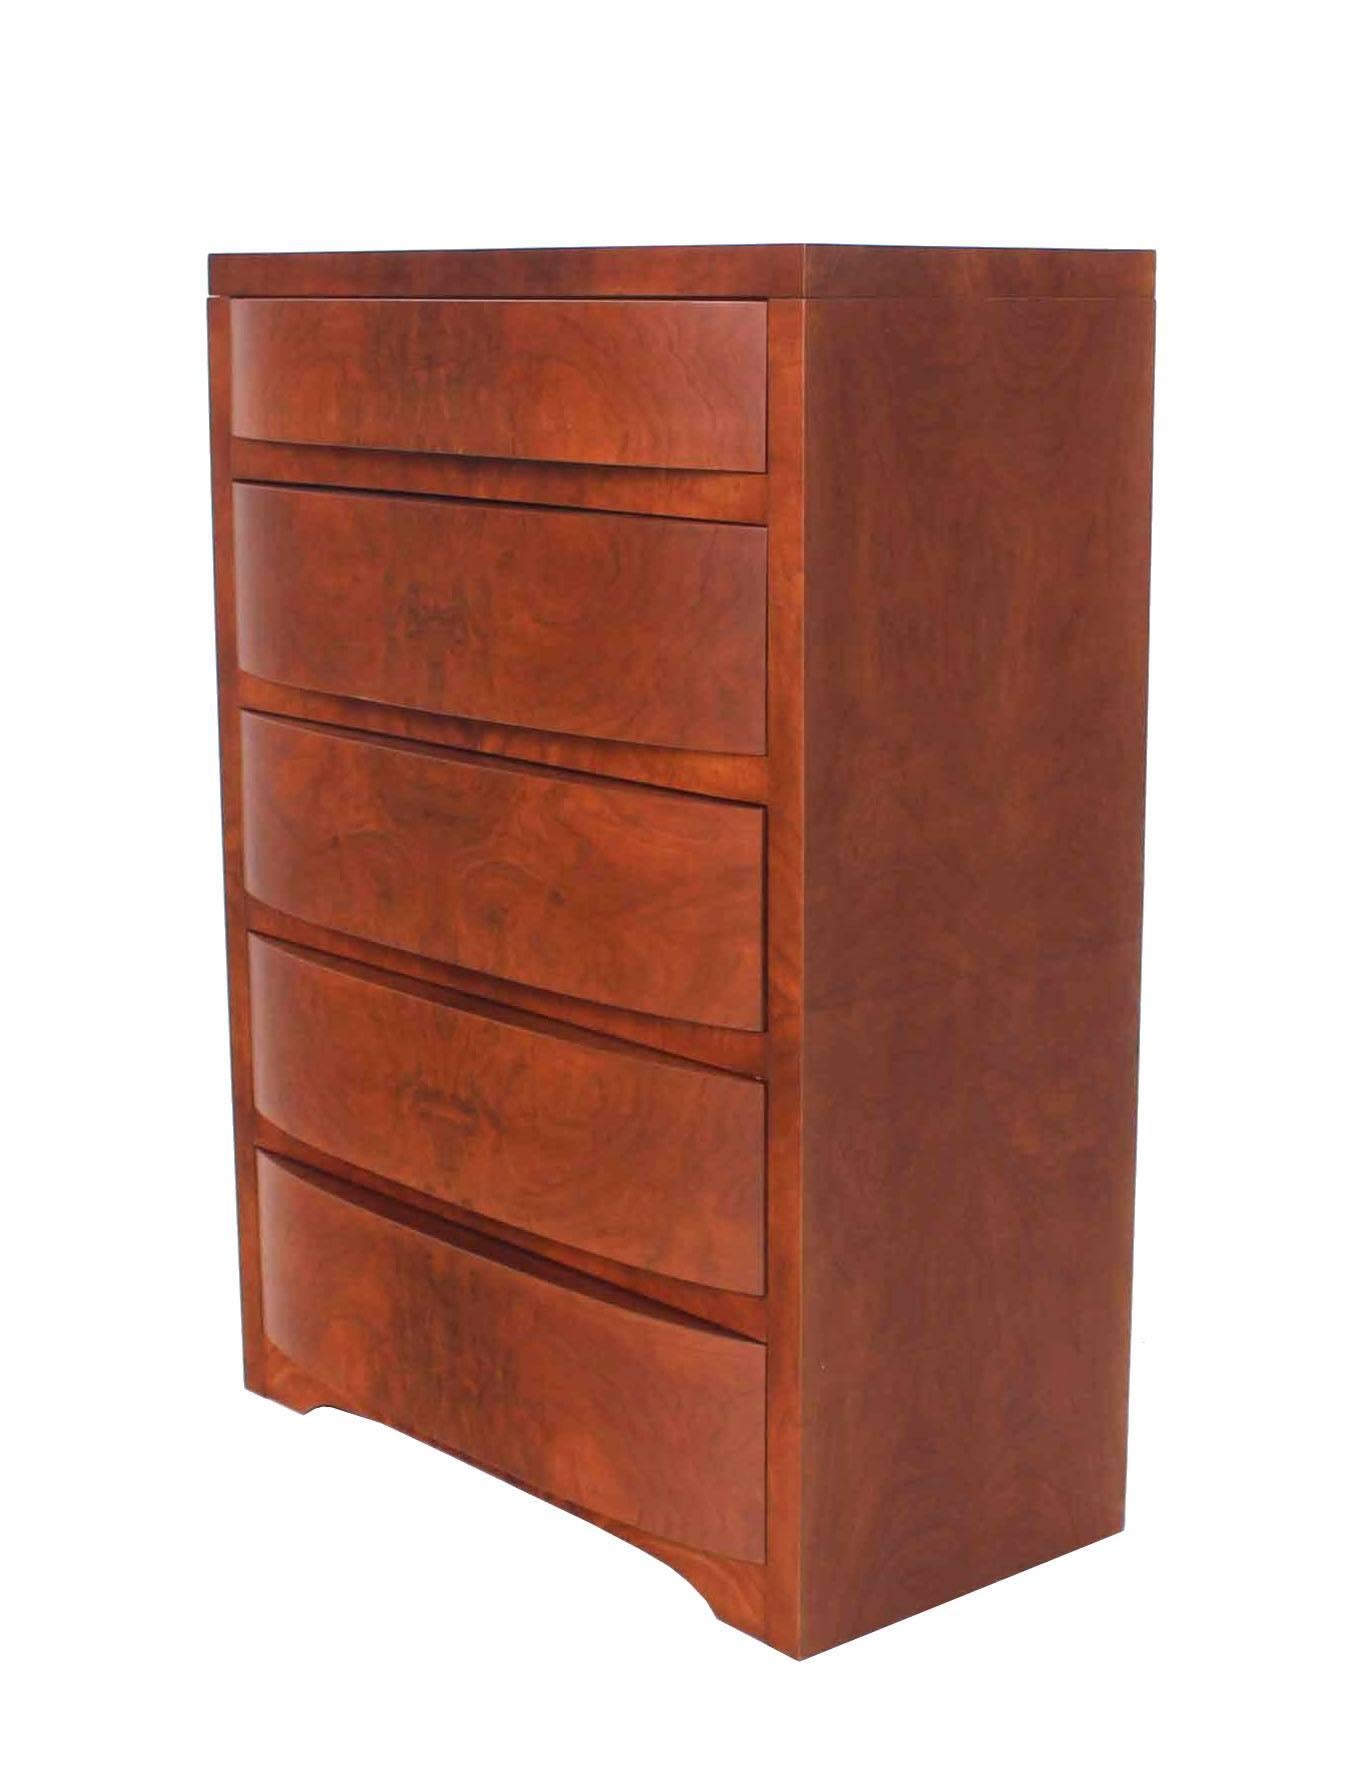 burled wood dresser